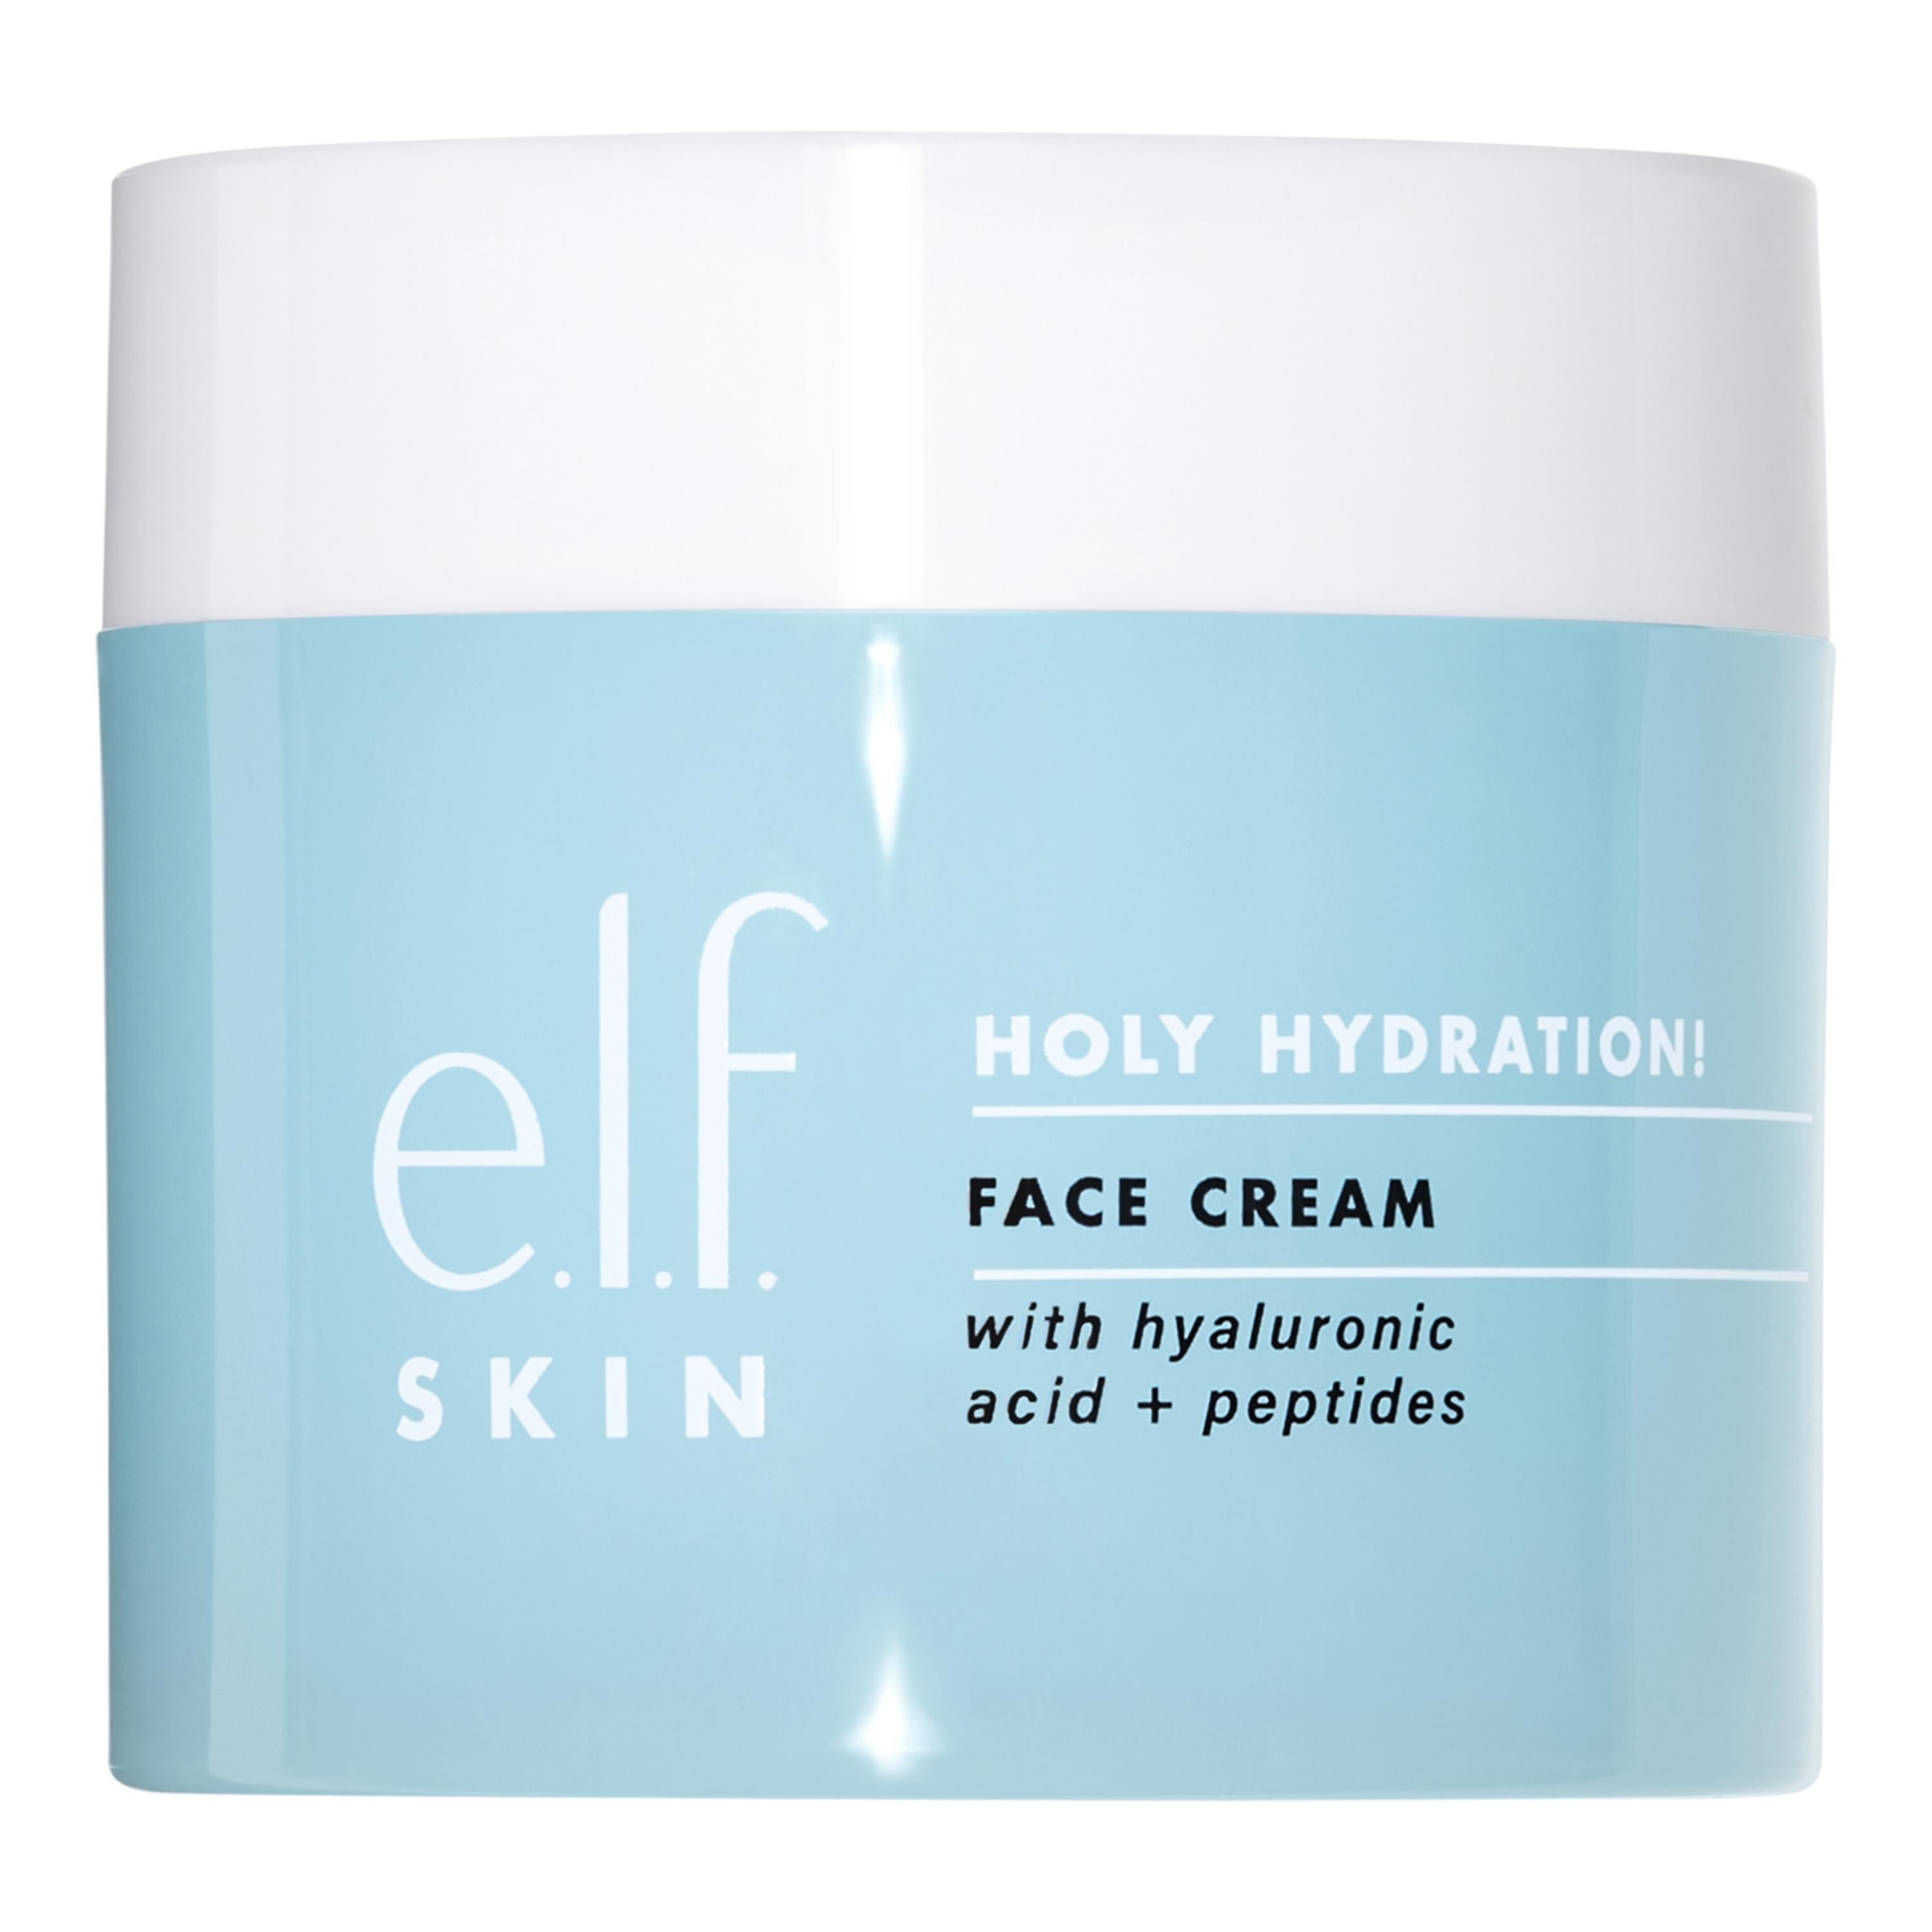 Elf Skin Holy Hydration Face Cream 